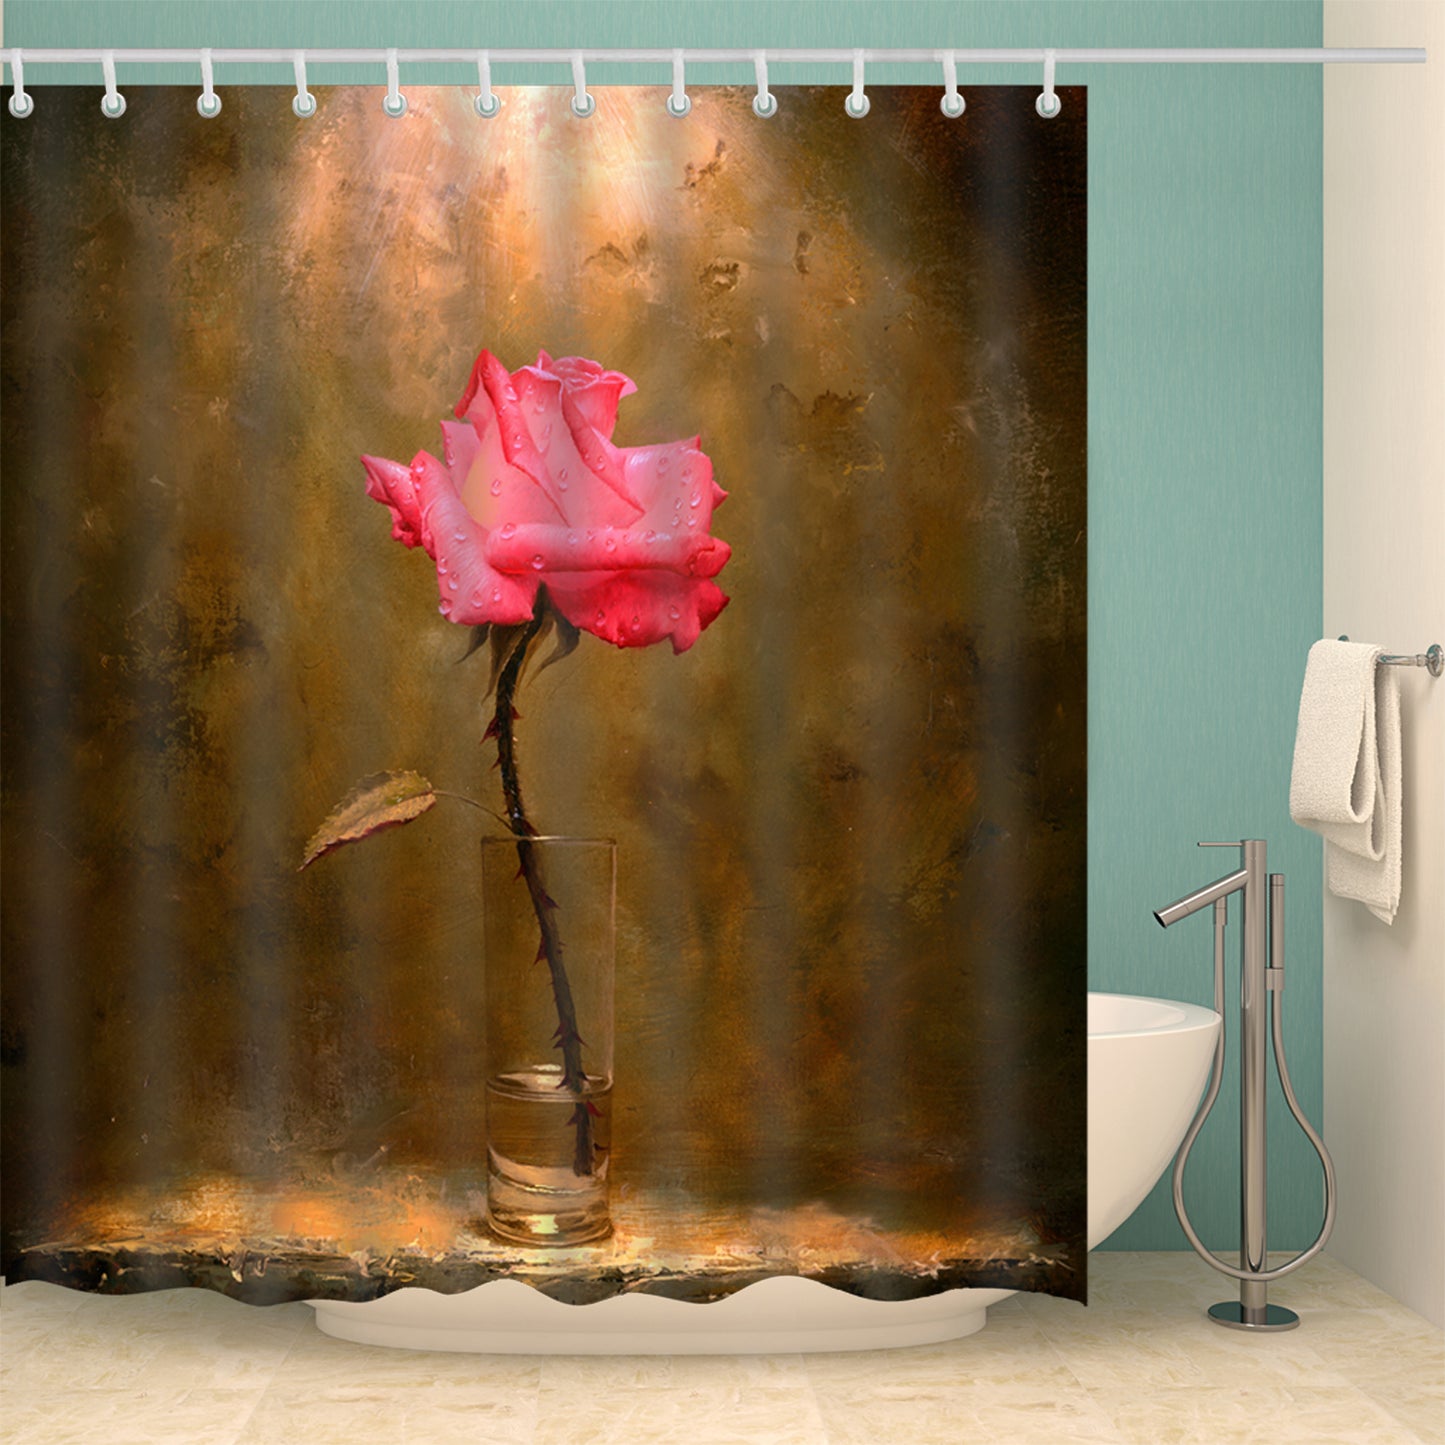 Indoor Pink Rose in Bottle Shower Curtain